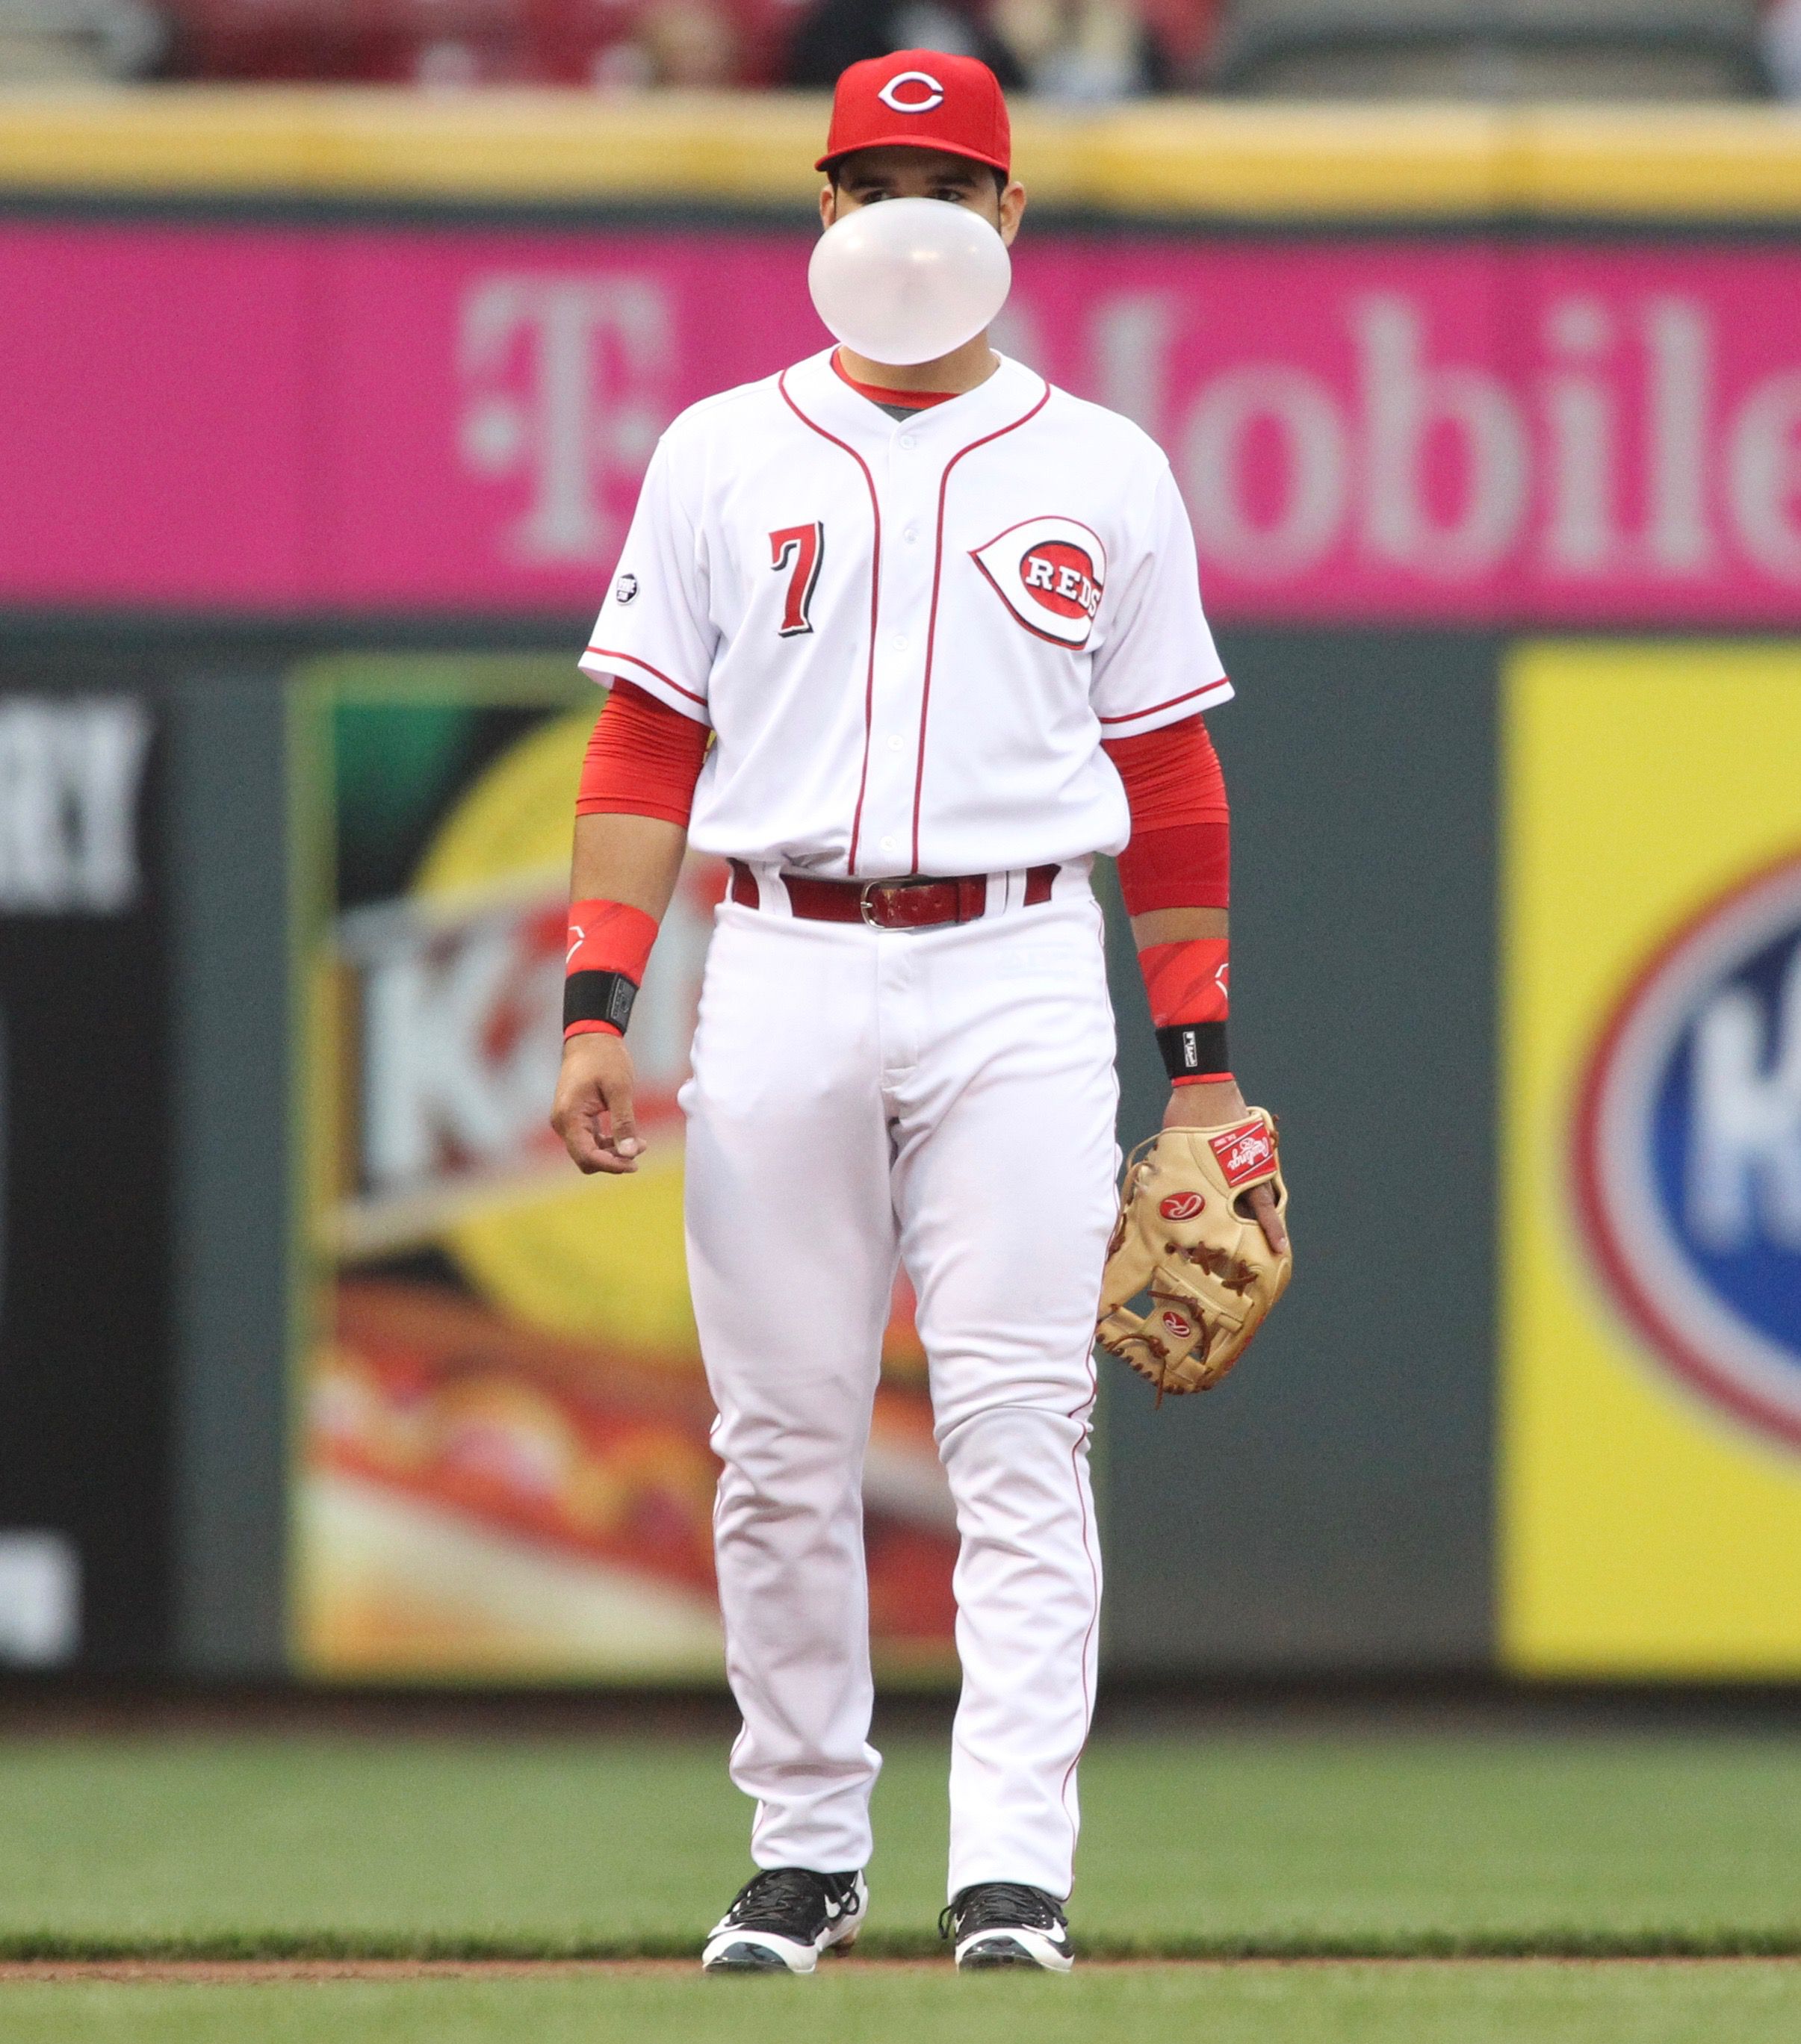 Sports snapshot: Rizzuto stuck to his bubble gum baseball ritual